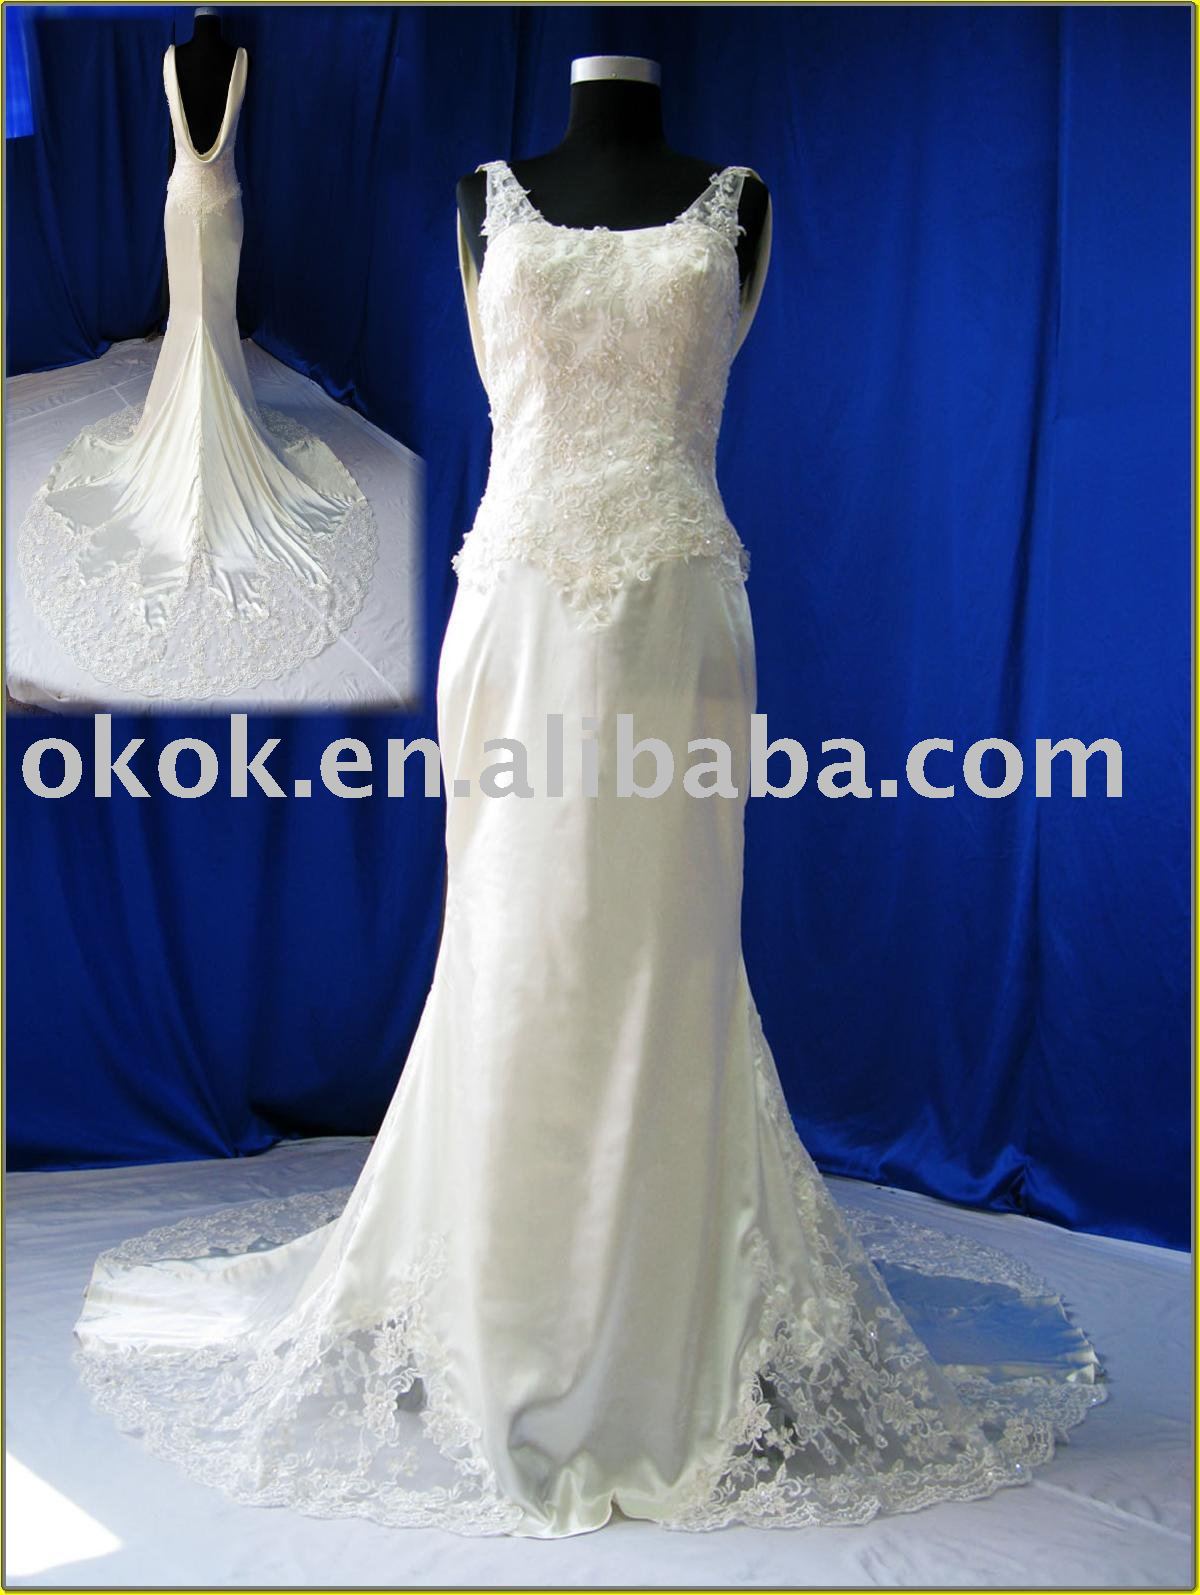 casual lace wedding dress